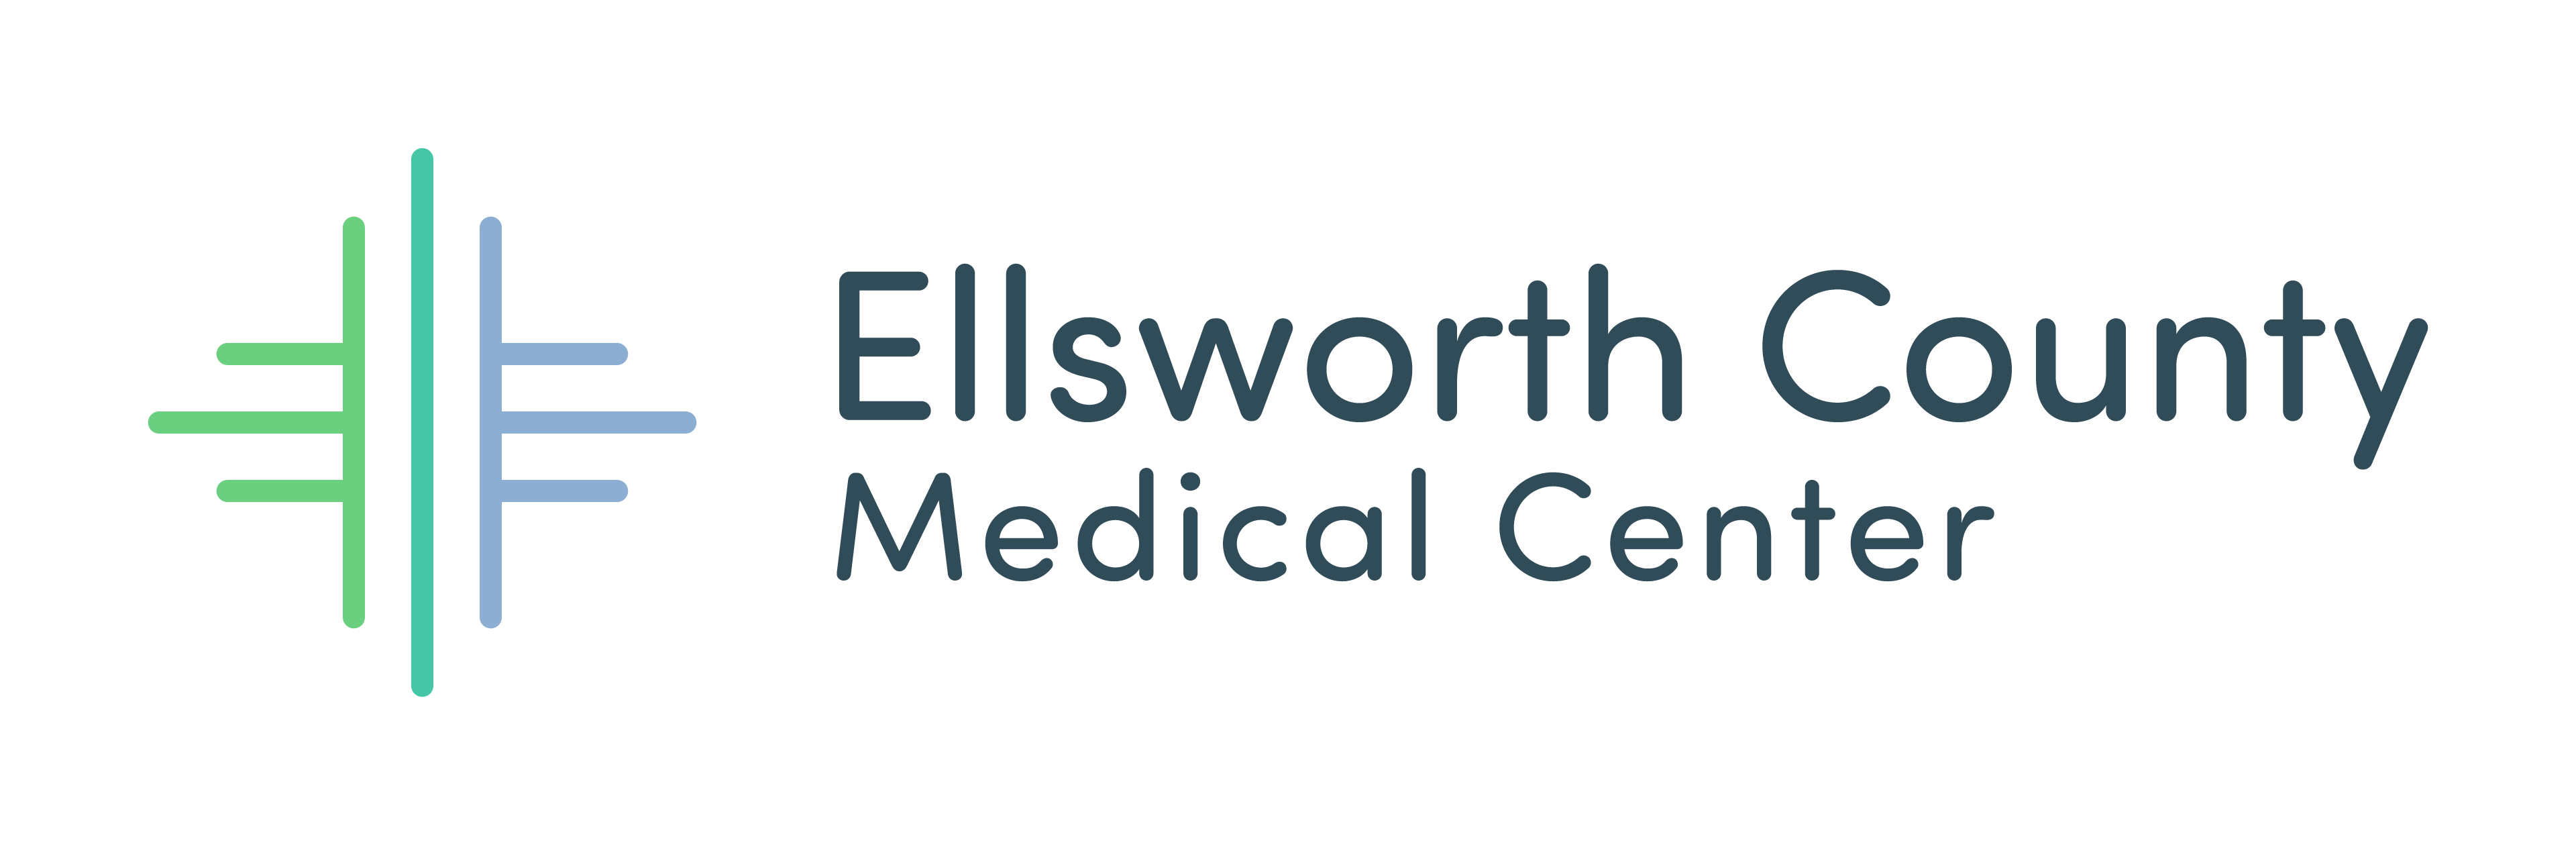 Ellsworth County Medical Center Logo